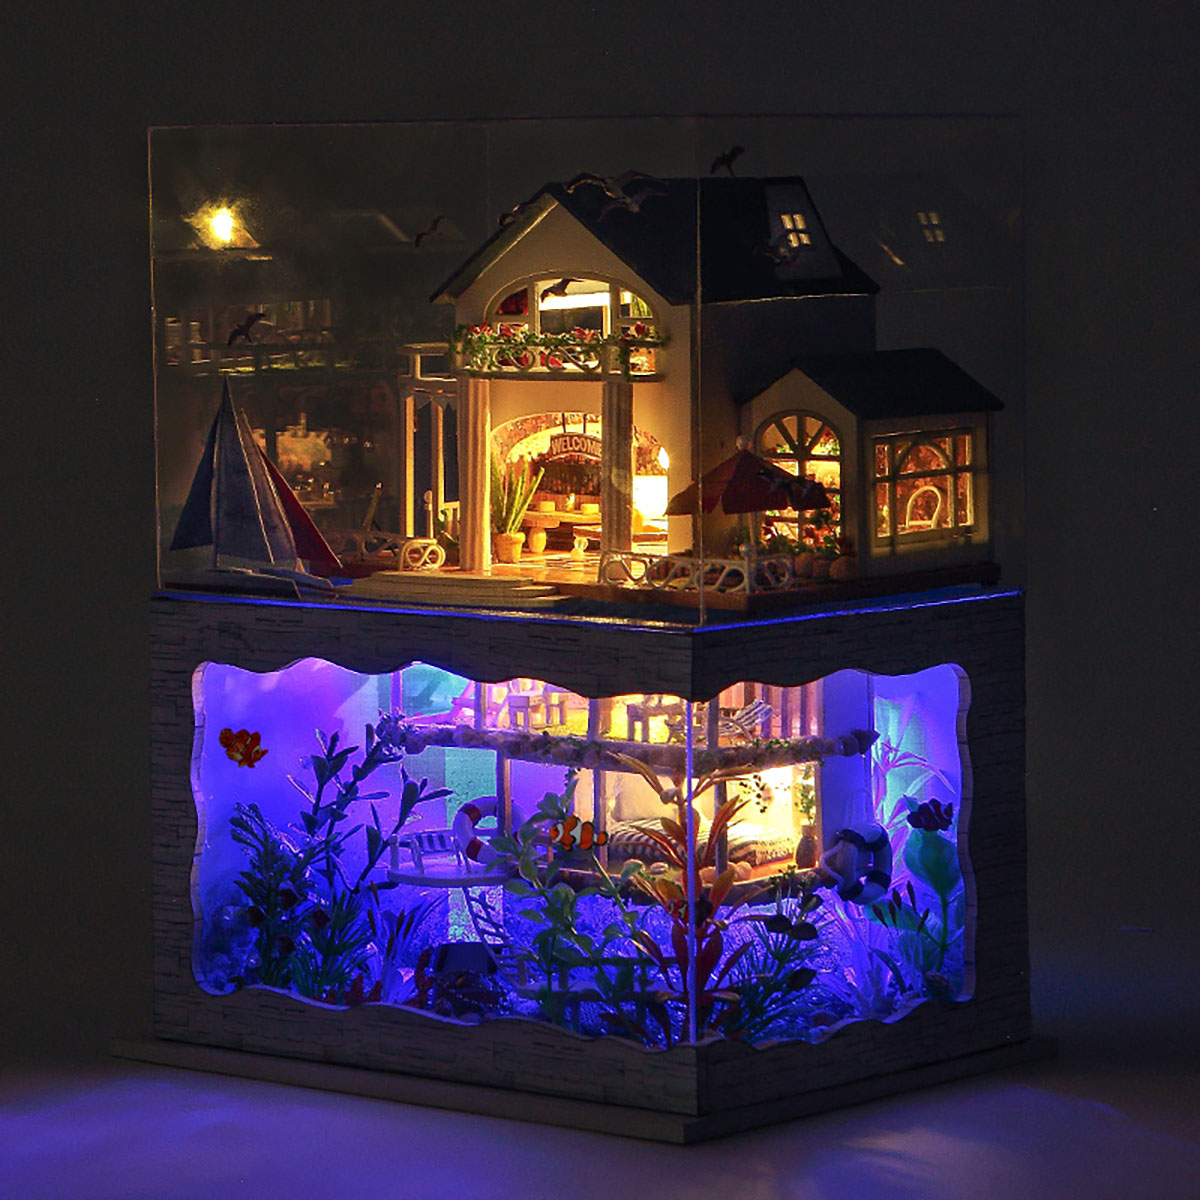 Wooden-DIY-Handmade-Assemble-Double-Layer-Beautiful-View-Doll-House-Miniature-Furniture-Kit-Educatio-1751562-2